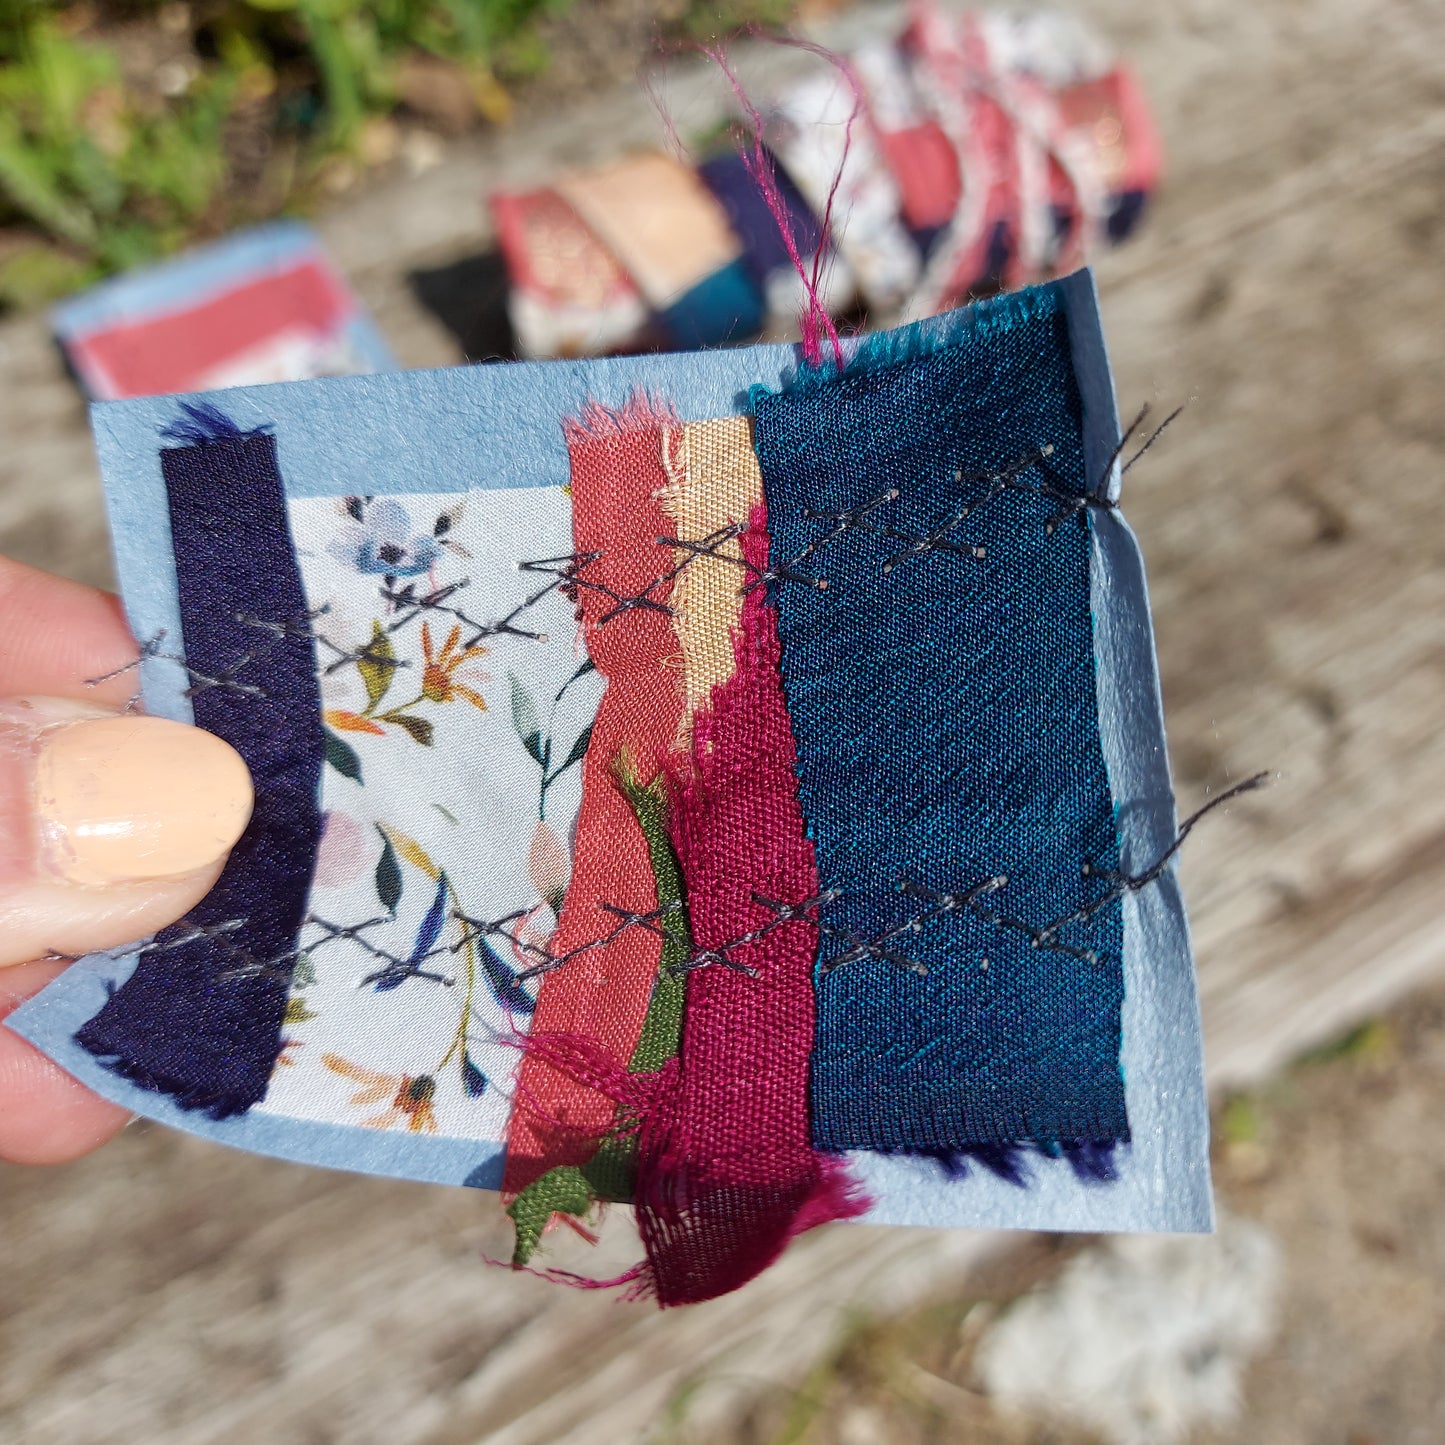 COMING SOON: Scrapcrafting Bitesize Textile Art